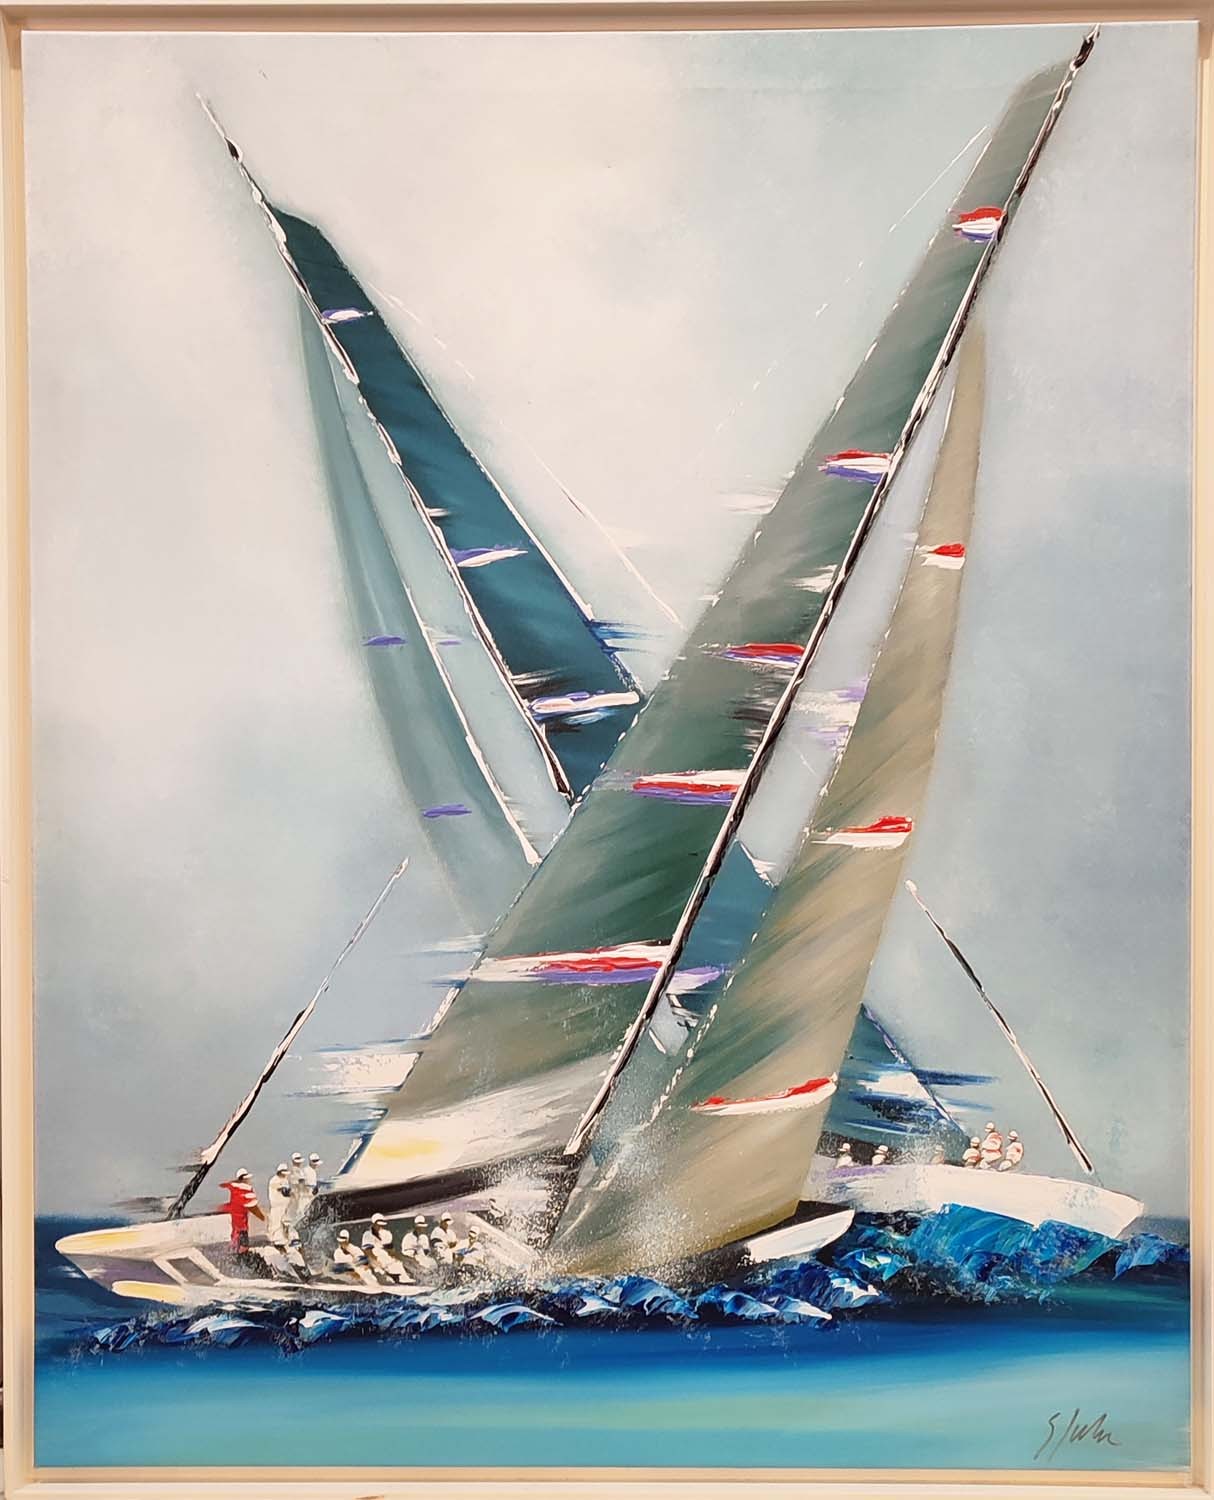 VICTOR SPAHN 'Americas cup', oil on canvas, 81cm x 65cm, framed.